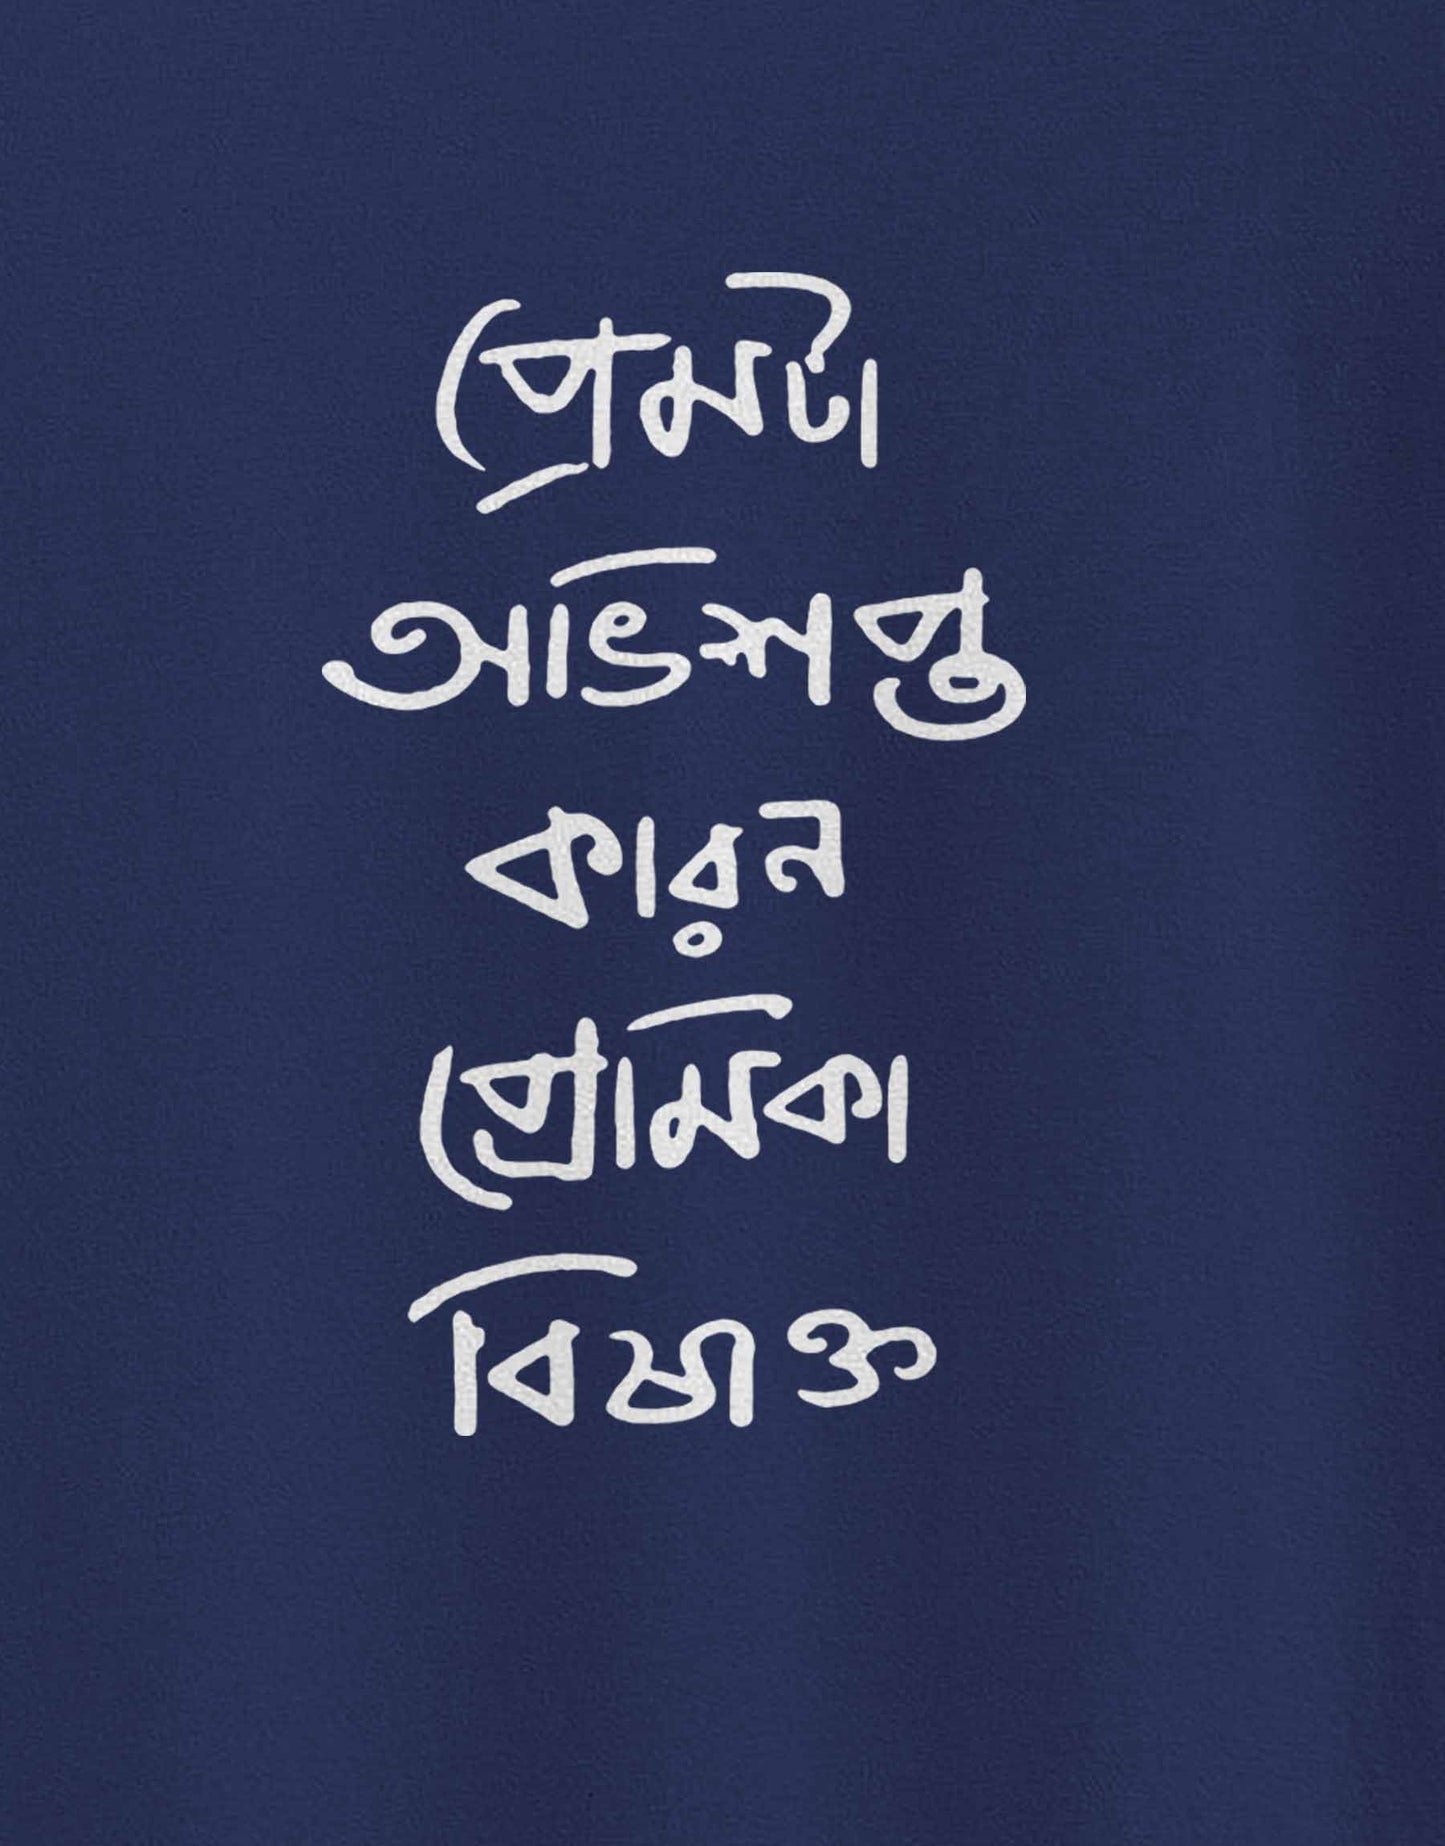 Prem Ta Abhisapto Bengali - TEEGURUJI T-Shirt - 499.00 - TEEGURUJI - Free Shipping